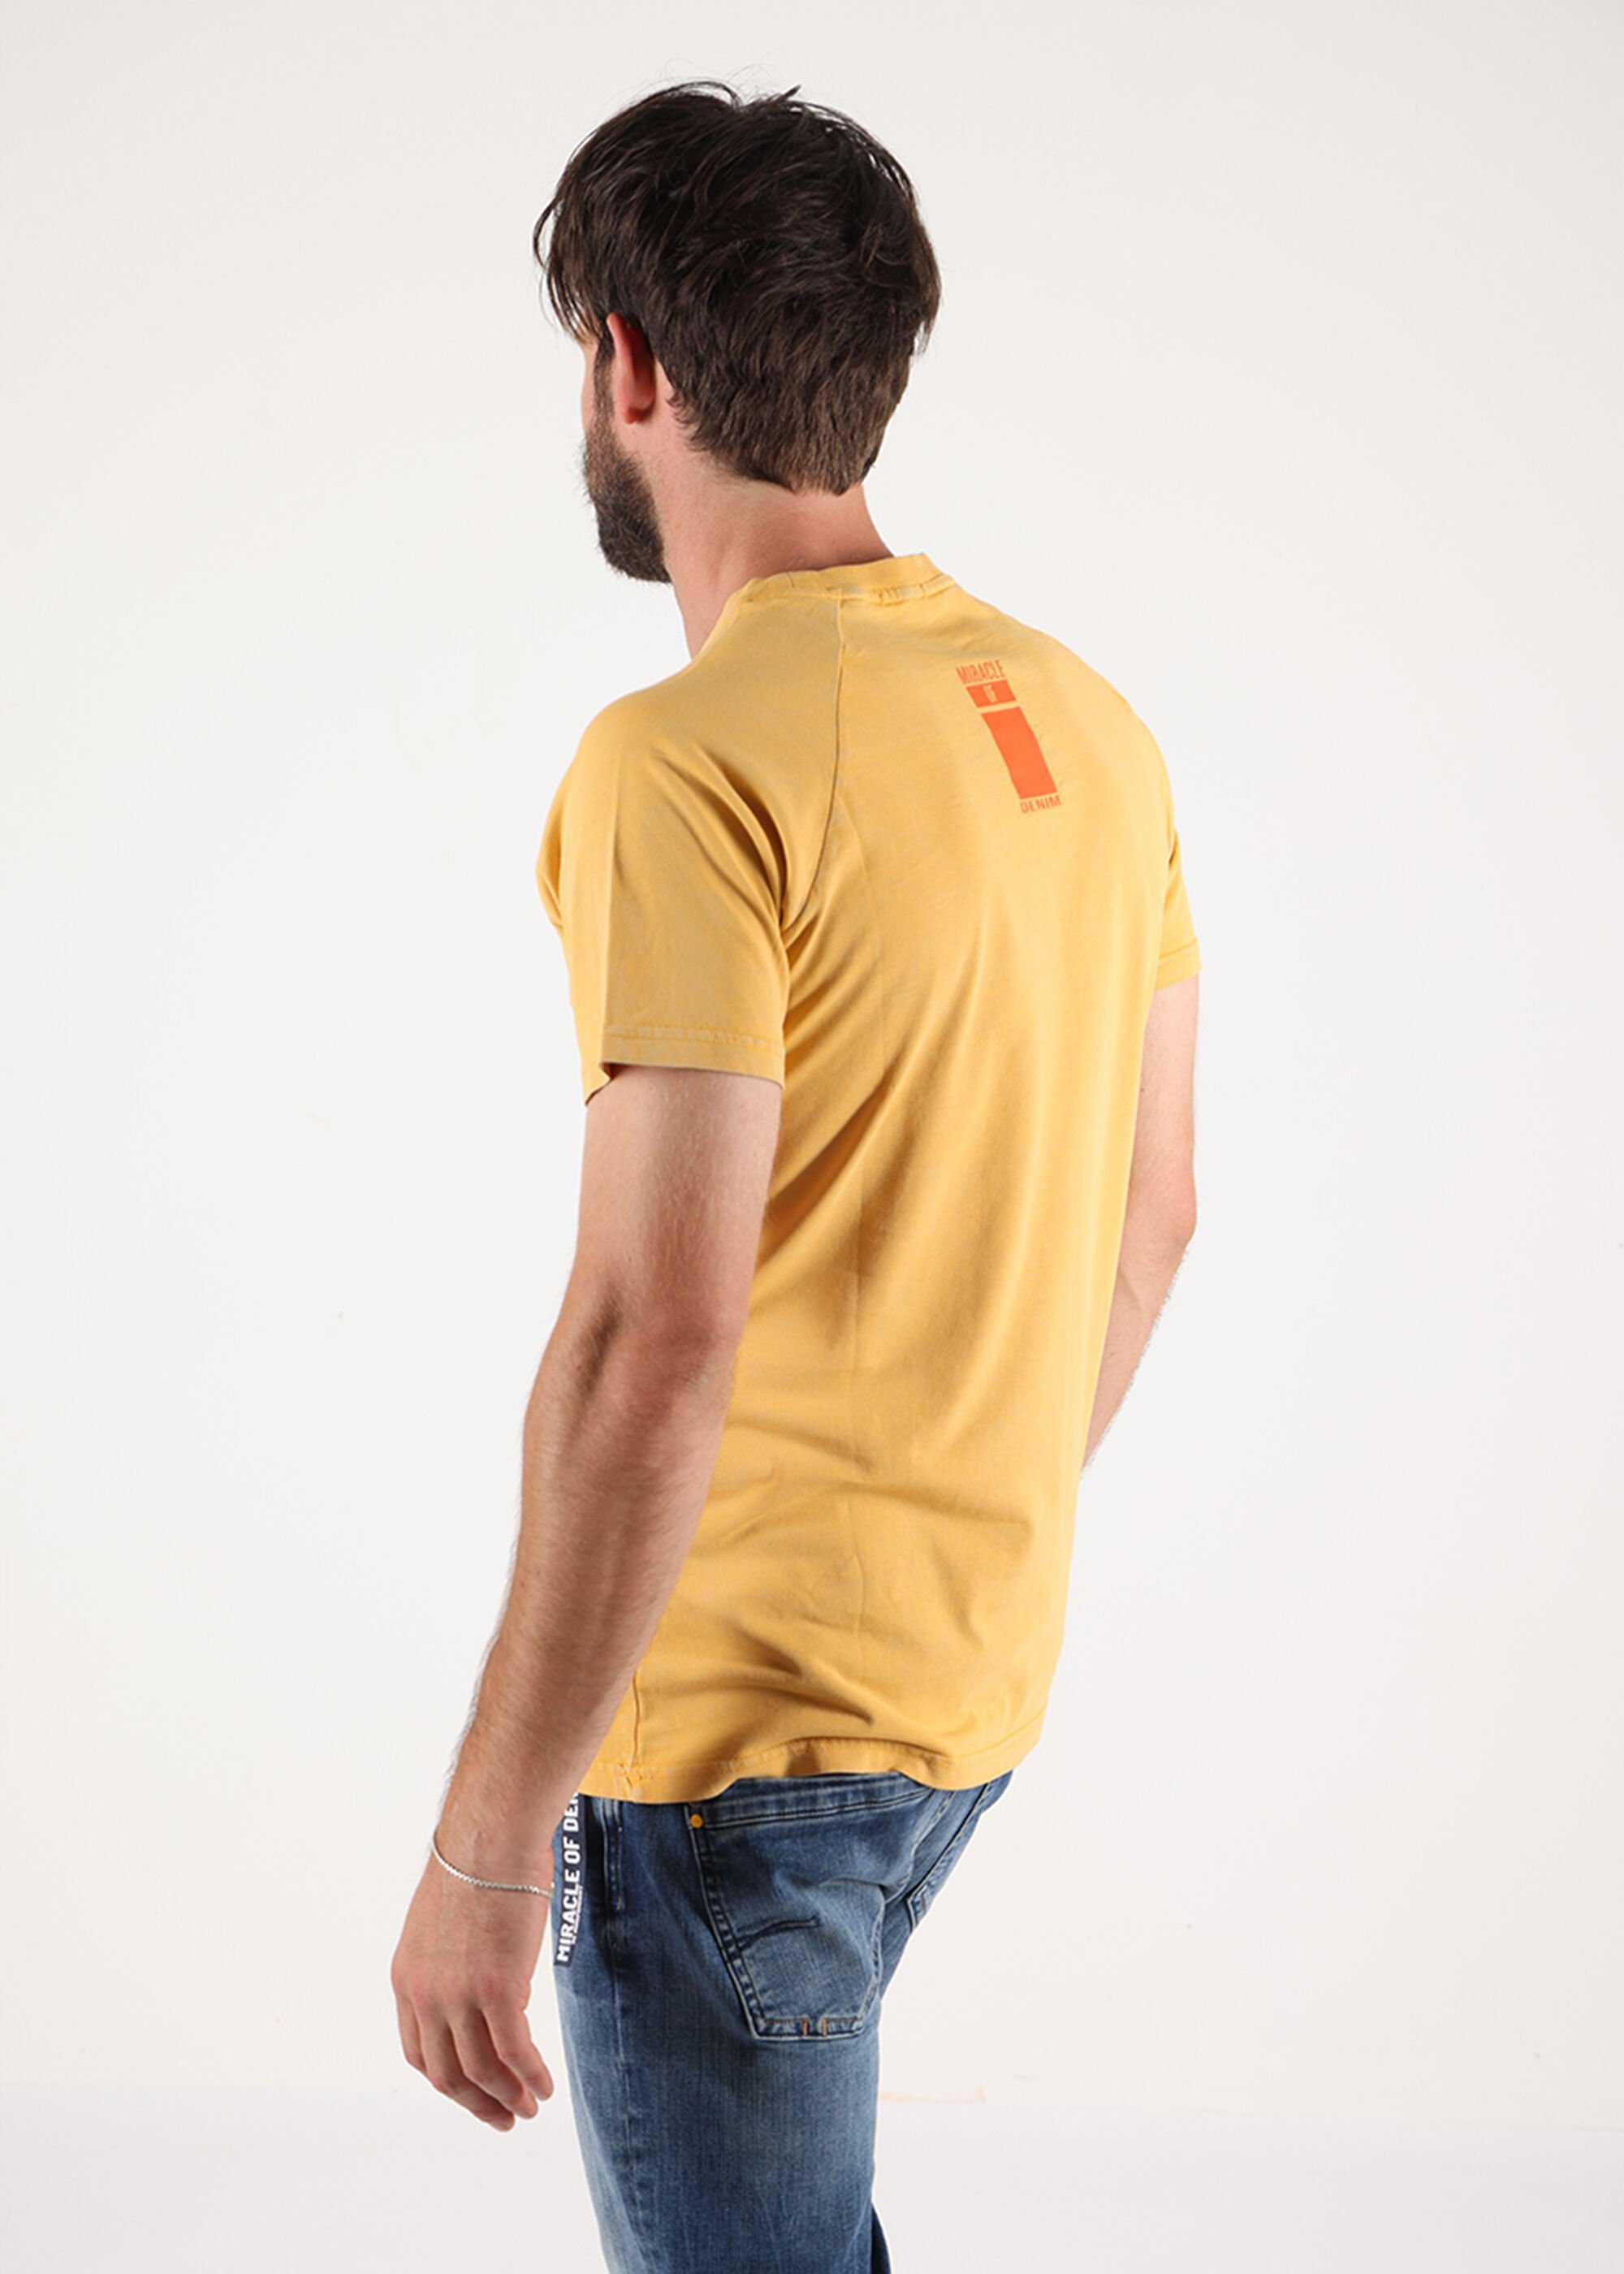 Yellow Miracle Banana of unifarbenen im Denim T-Shirt Design